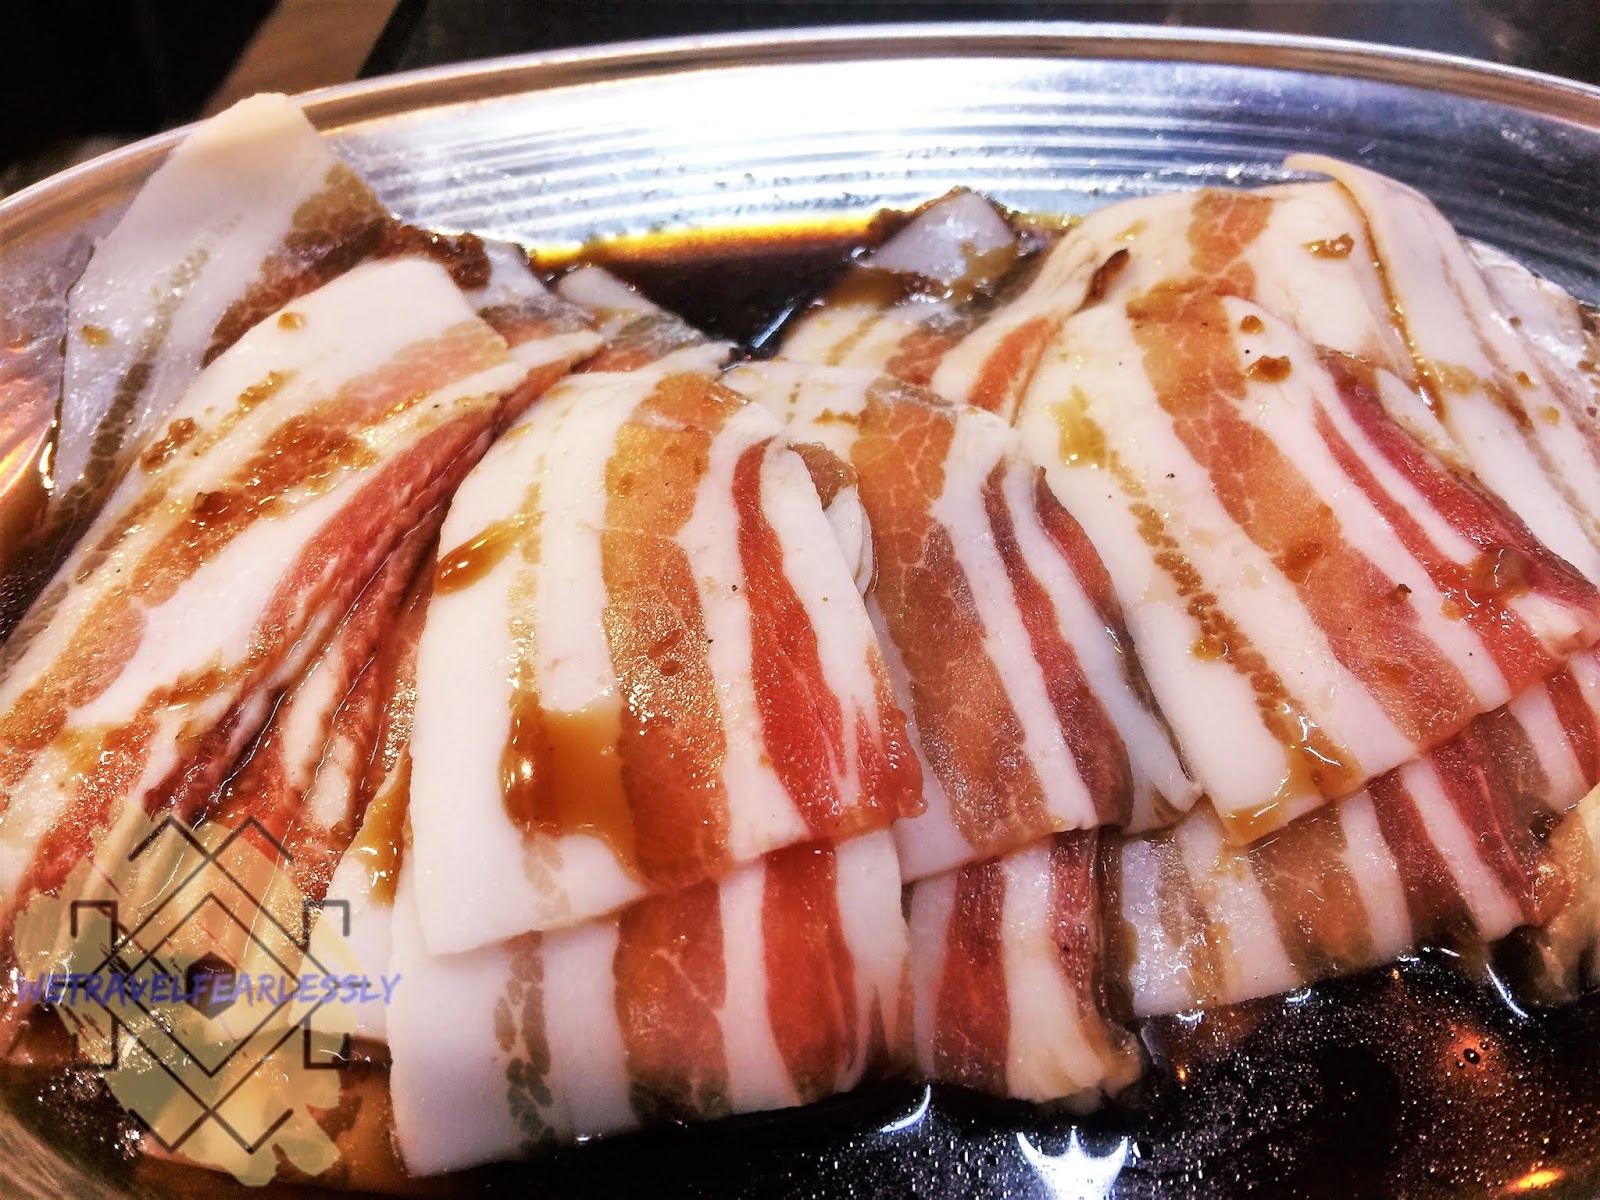 Marinated Pork Strips in Samgyeopmasarap in SM Marikina - WTF Review